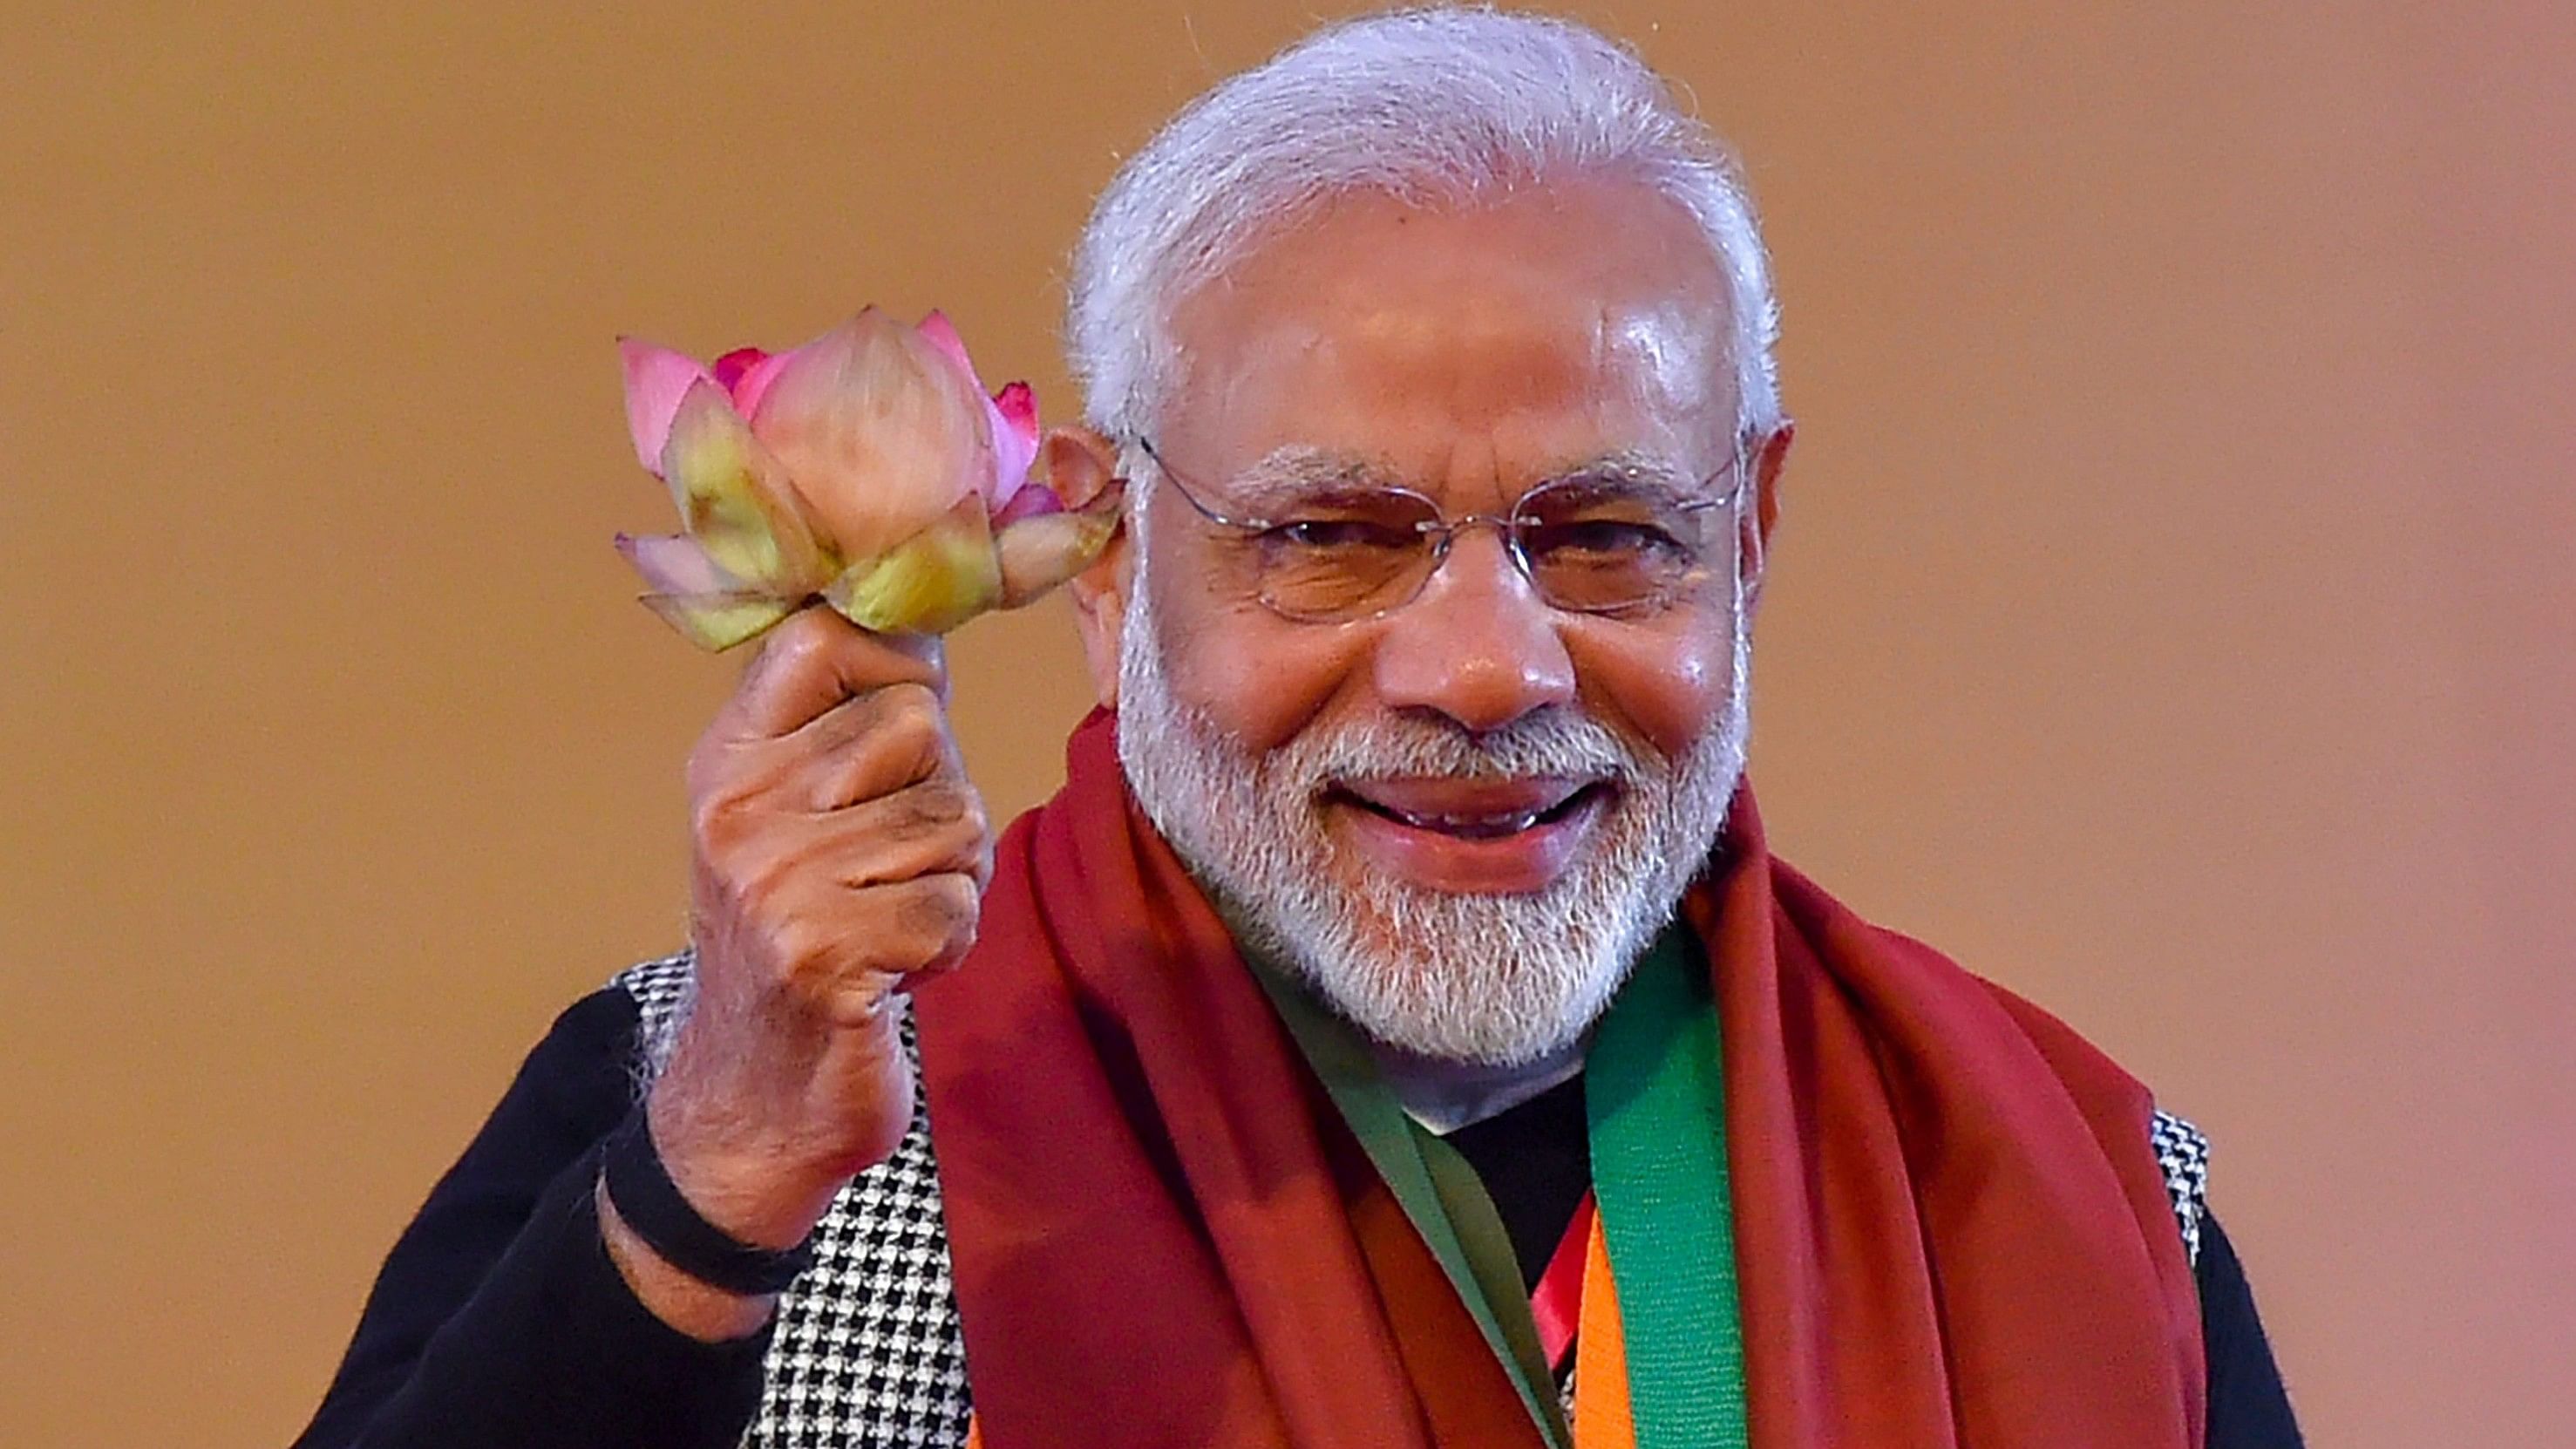 <div class="paragraphs"><p>Prime Minister Narendra Modi holds a lotus flower.&nbsp;</p></div>